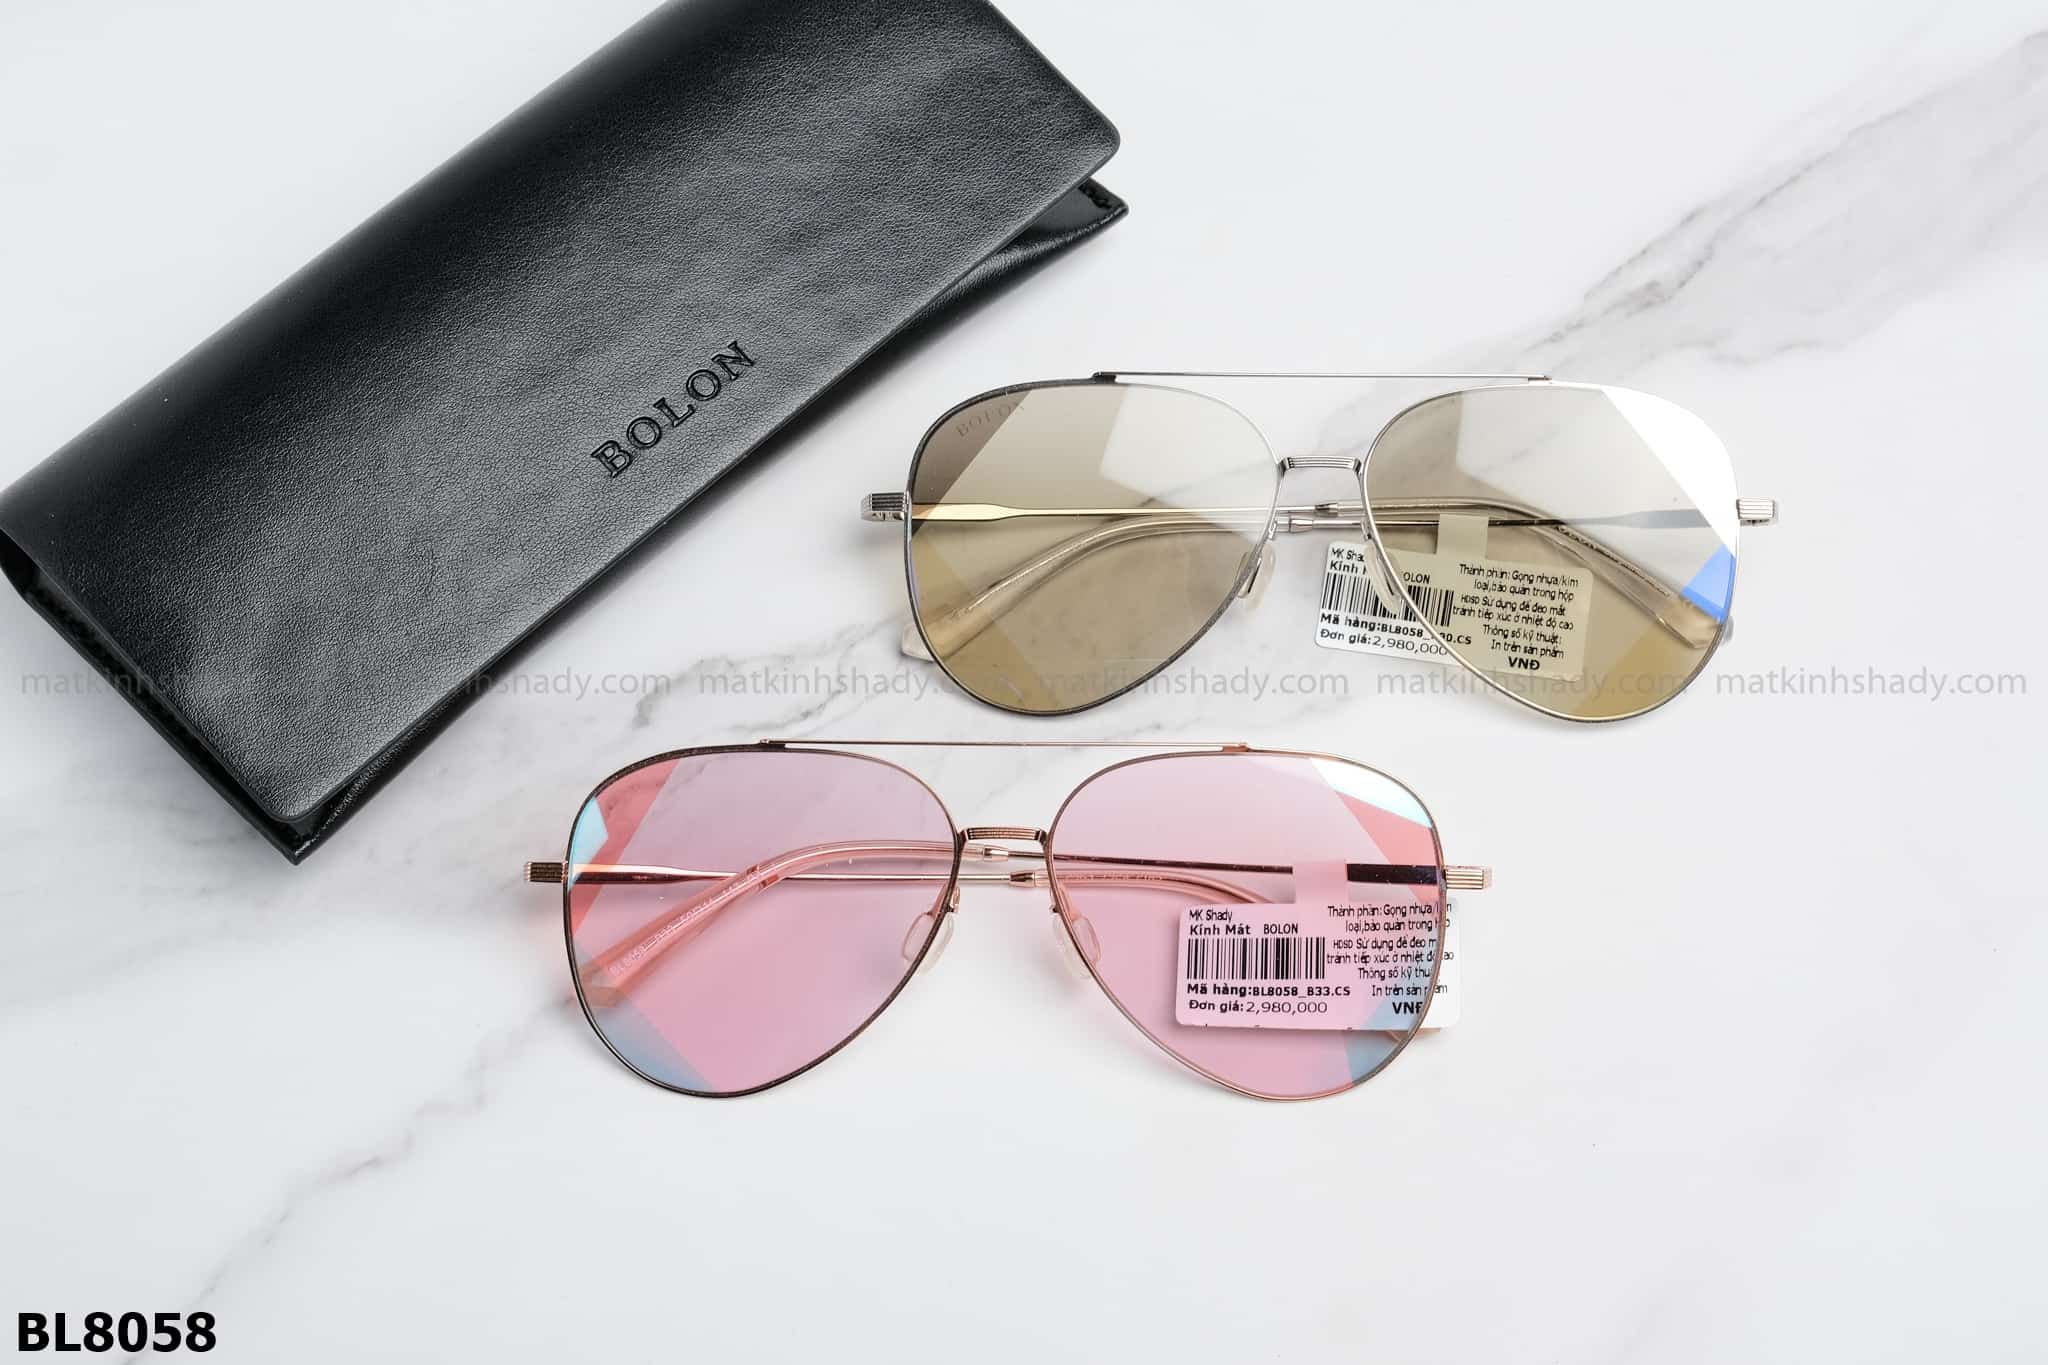  Bolon Eyewear - Sunglasses - BL8058 